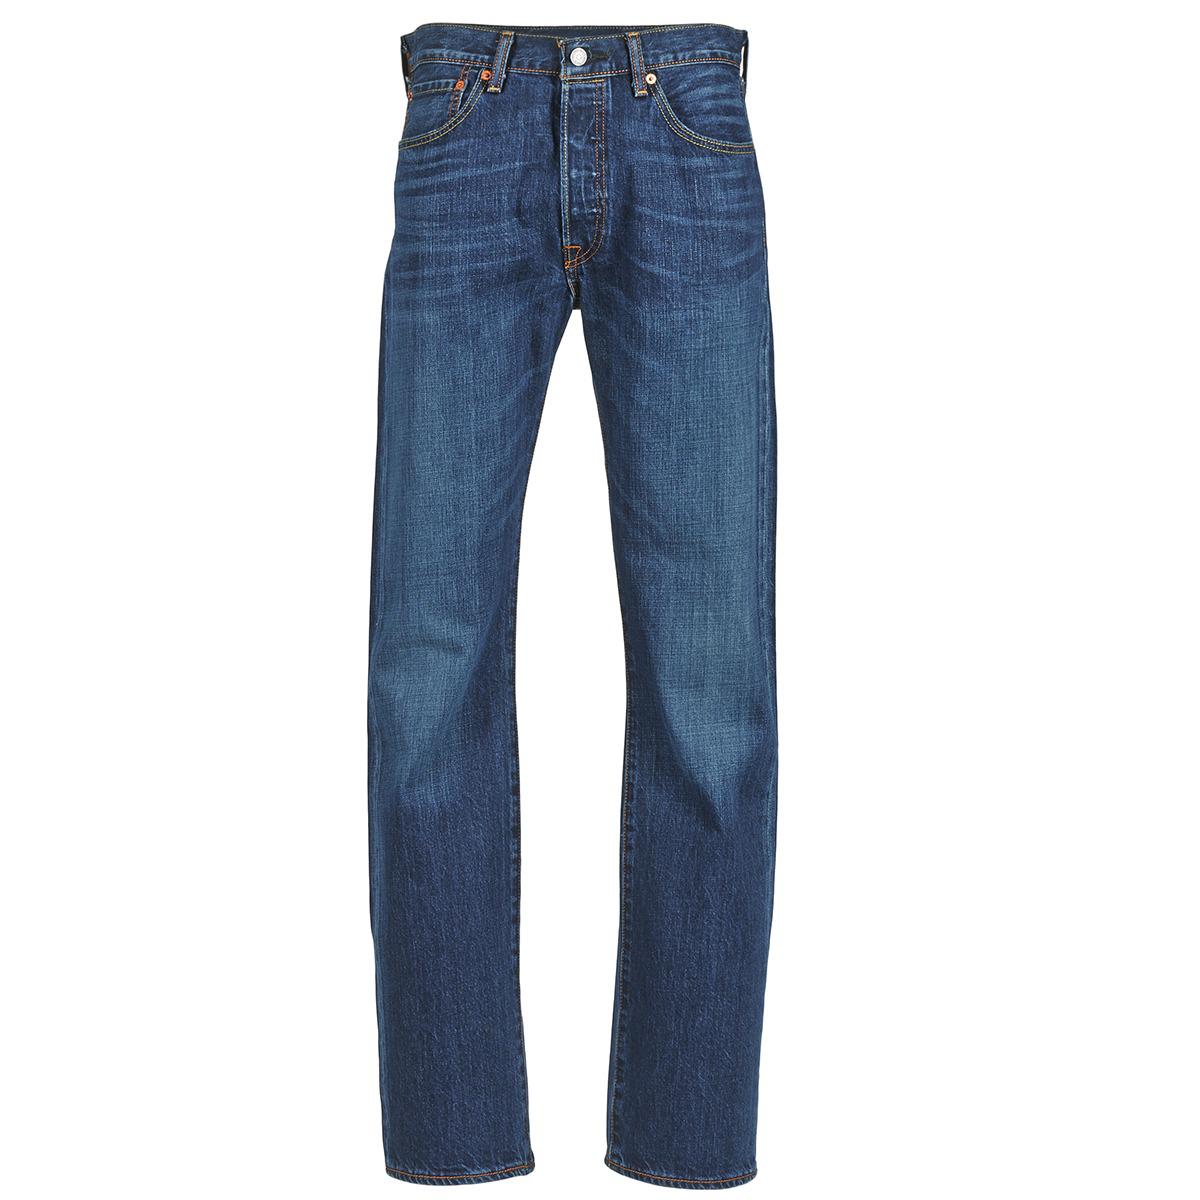 Levi's Denim 501 Jeans in Blue for Men - Lyst